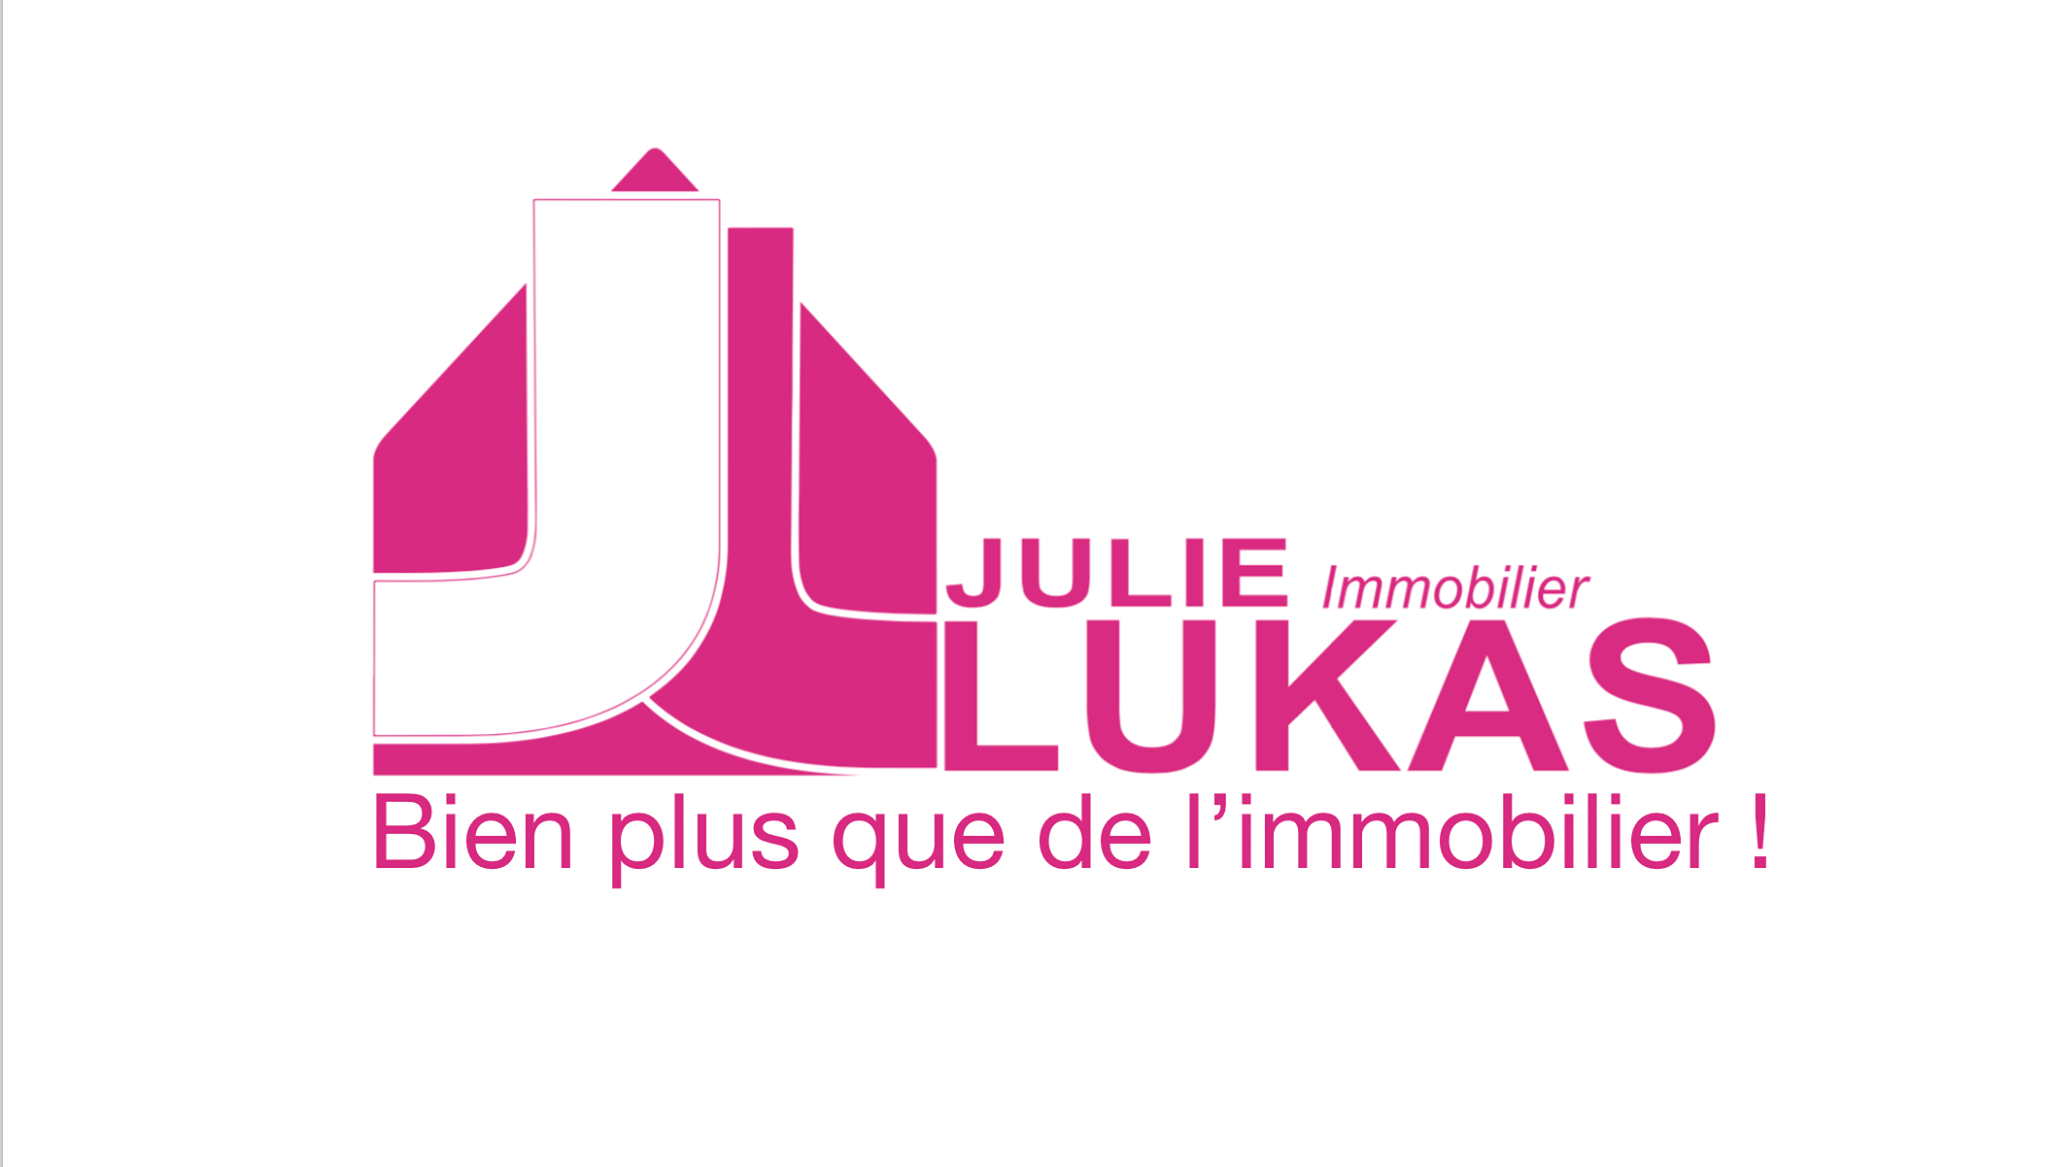 julie lukas